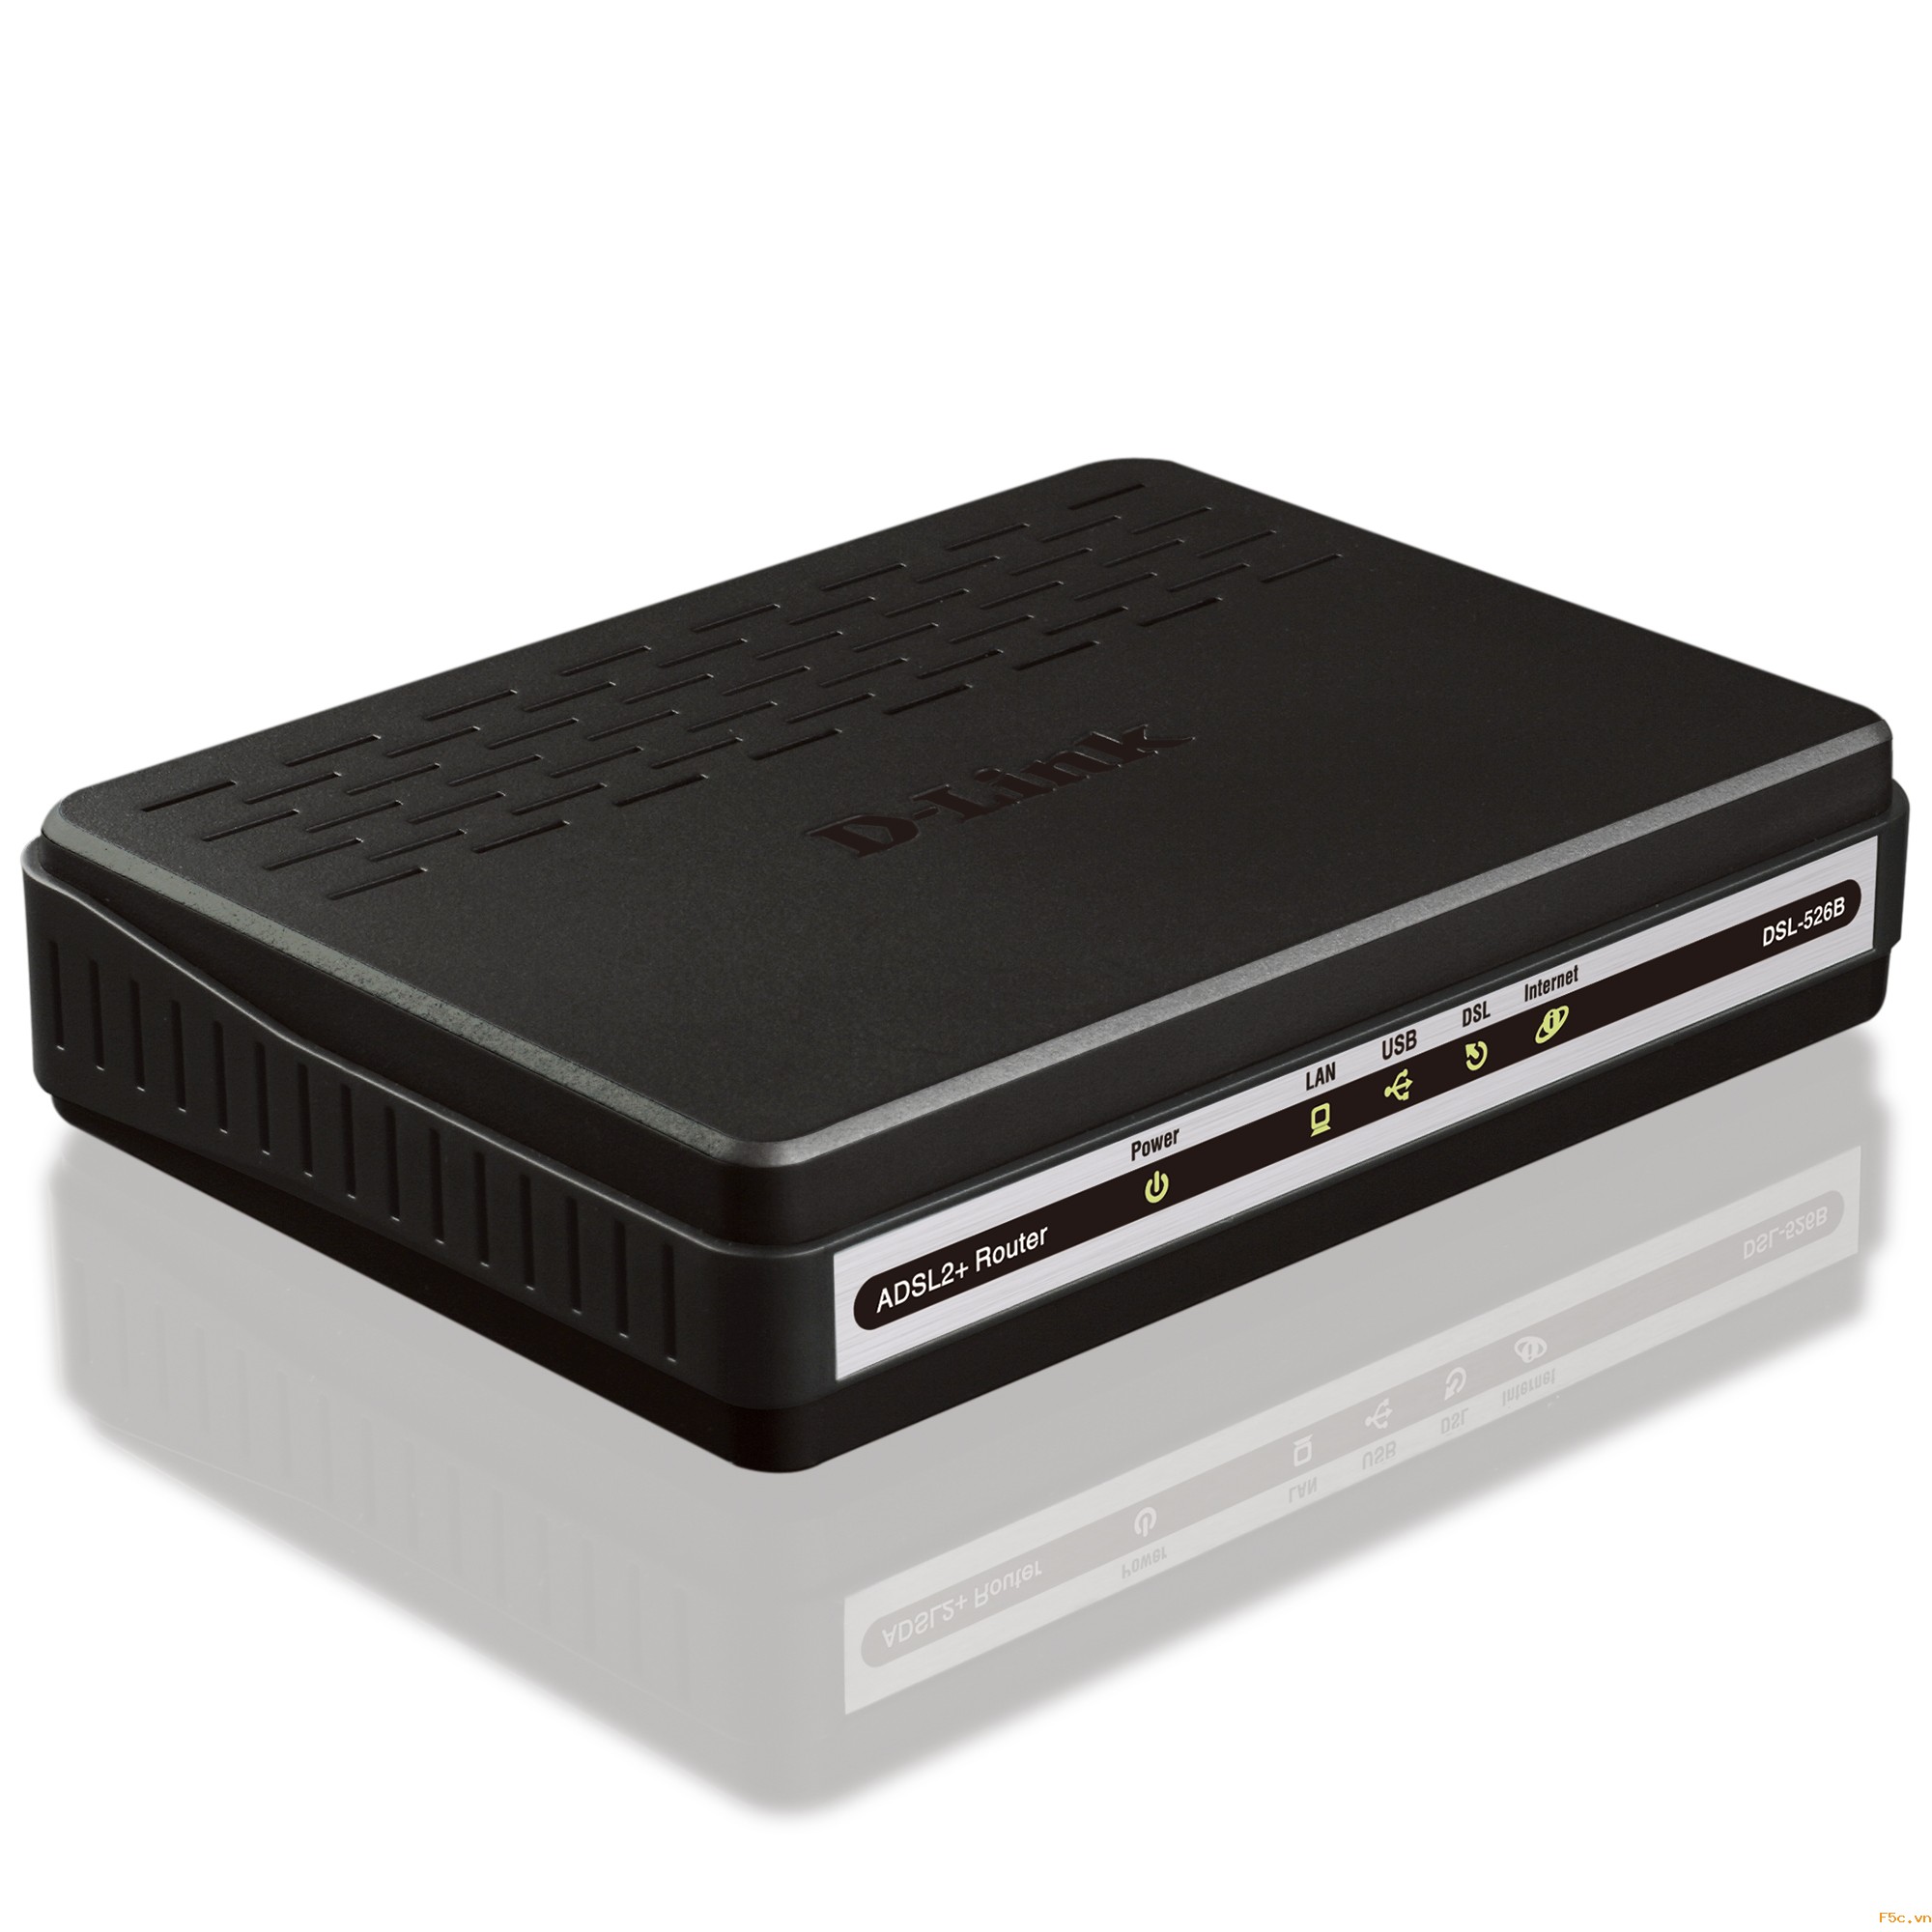 Modem D-Link DSL-526B - ADSL2+ USB